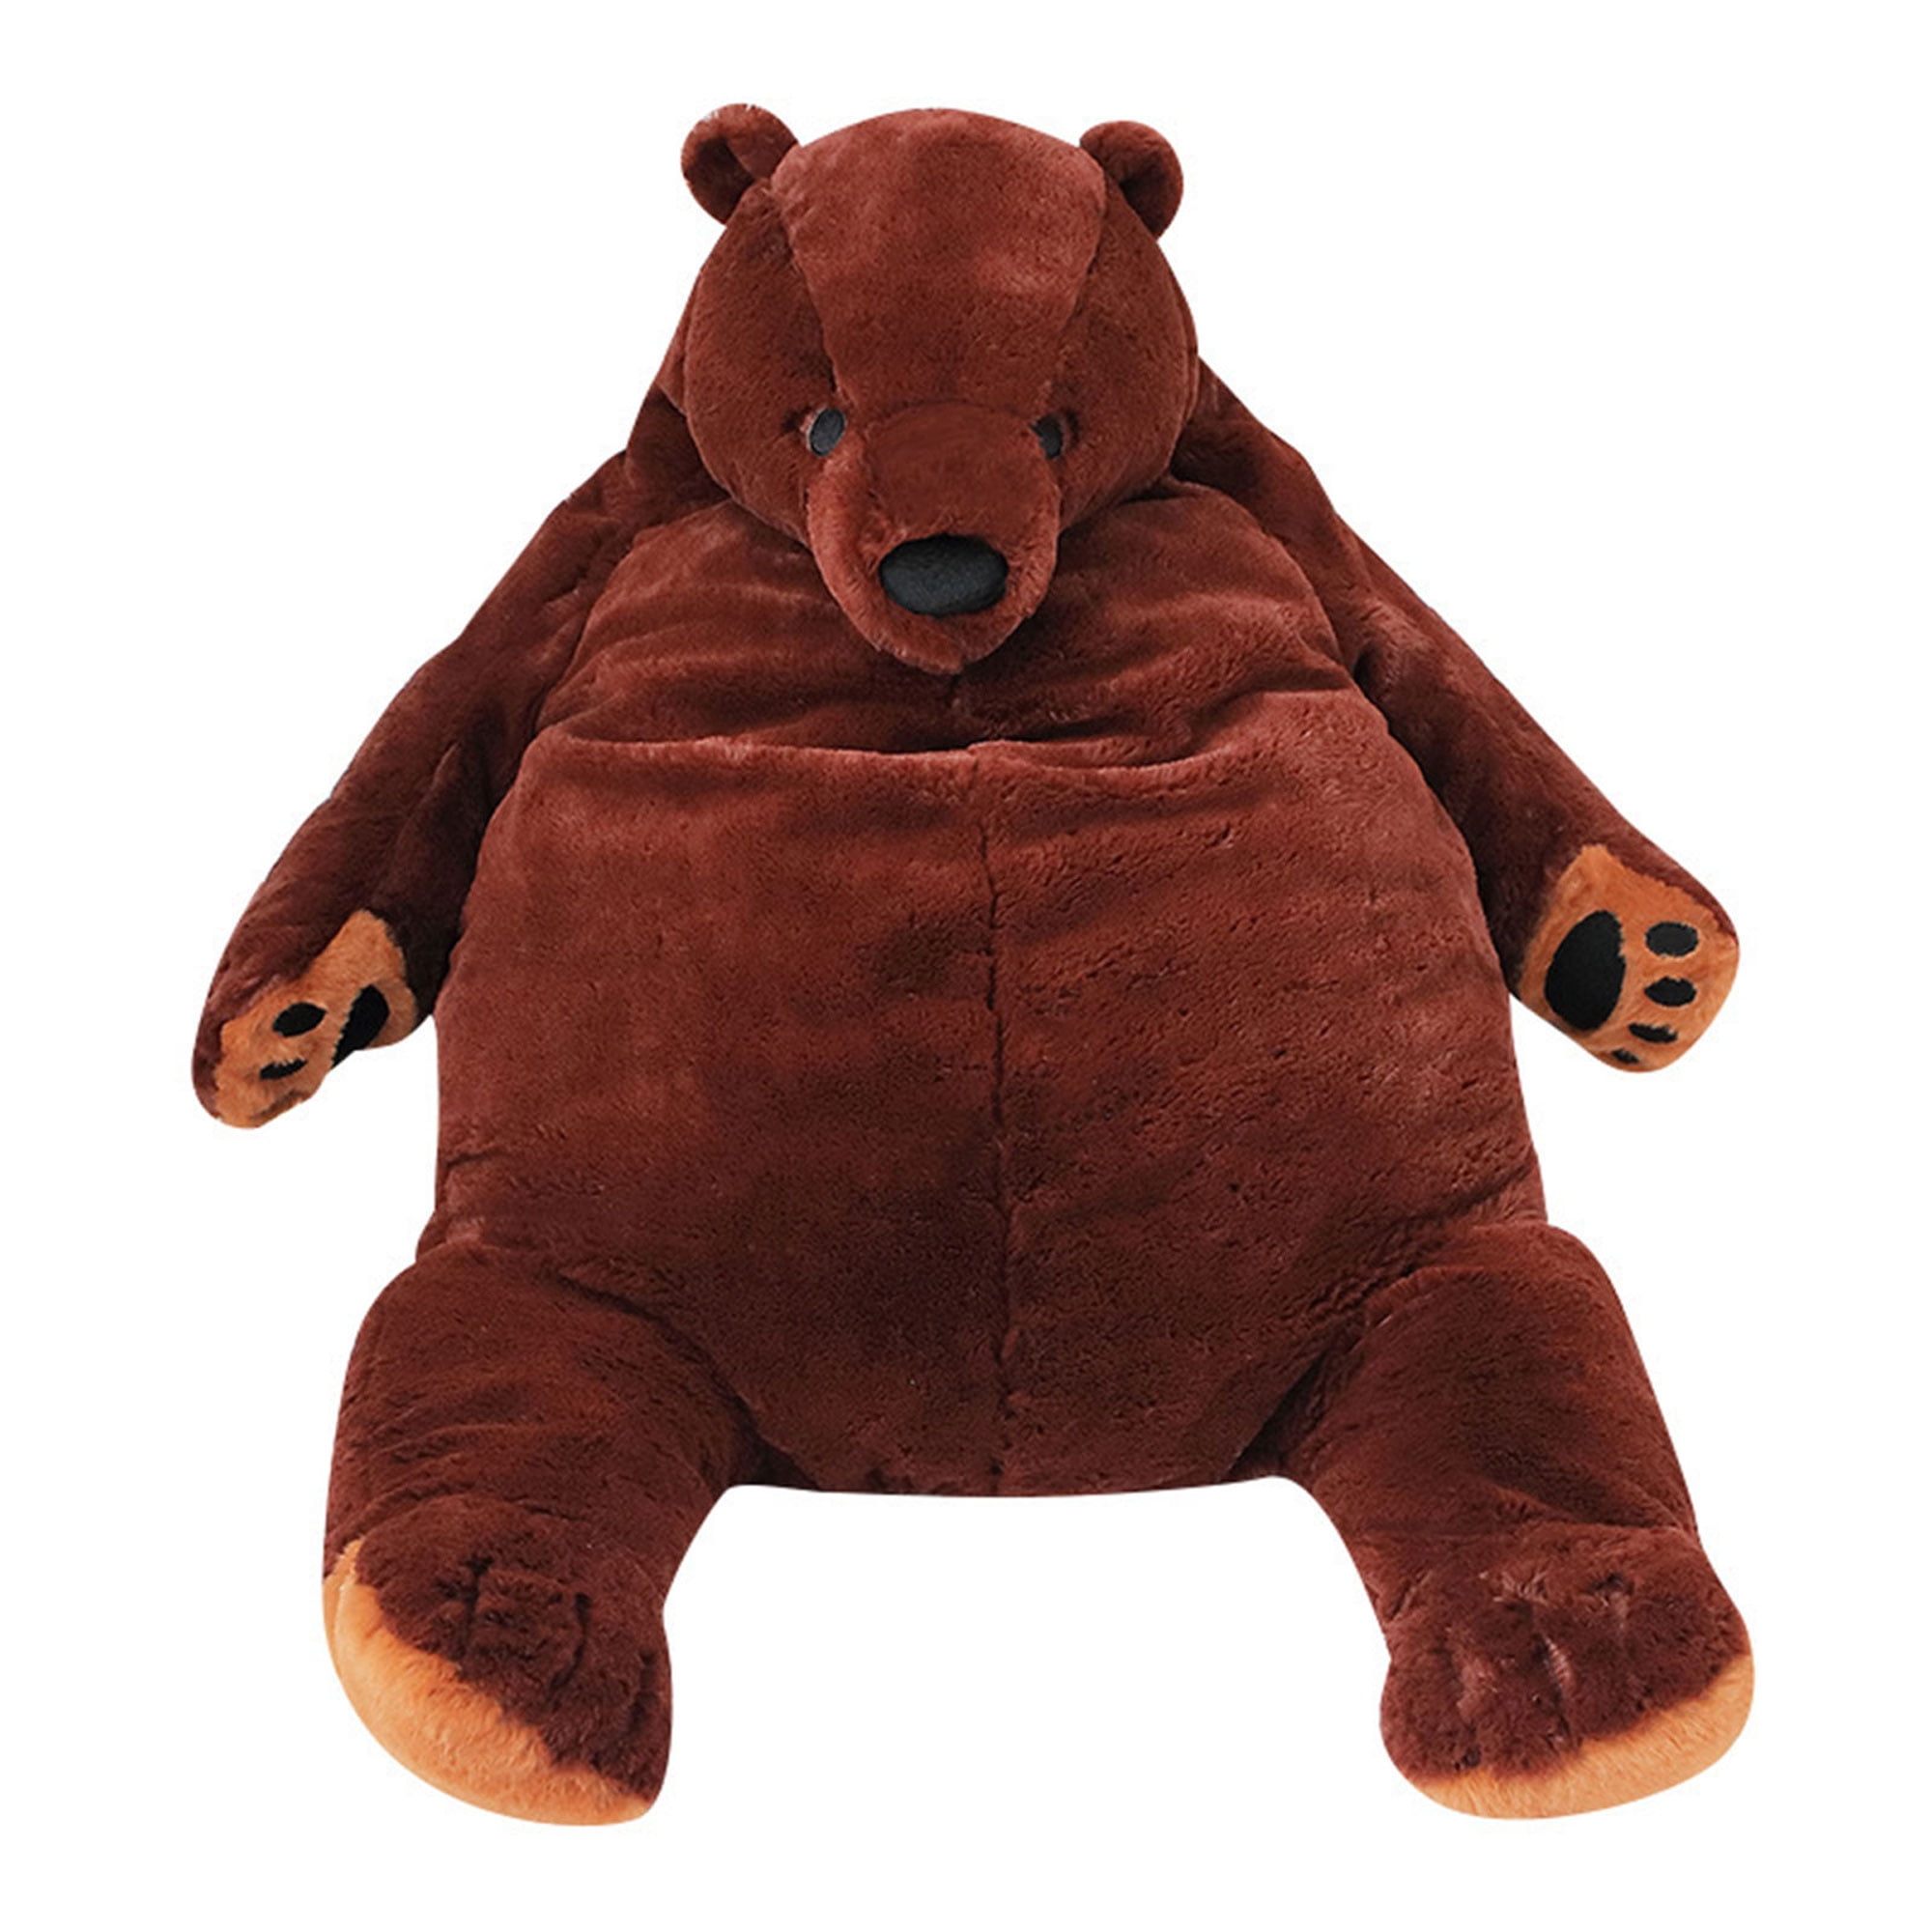 Giant Simulation Plush Soft Toy Brown Teddy Bear Stuffed Animal 40cm Gift Toys 